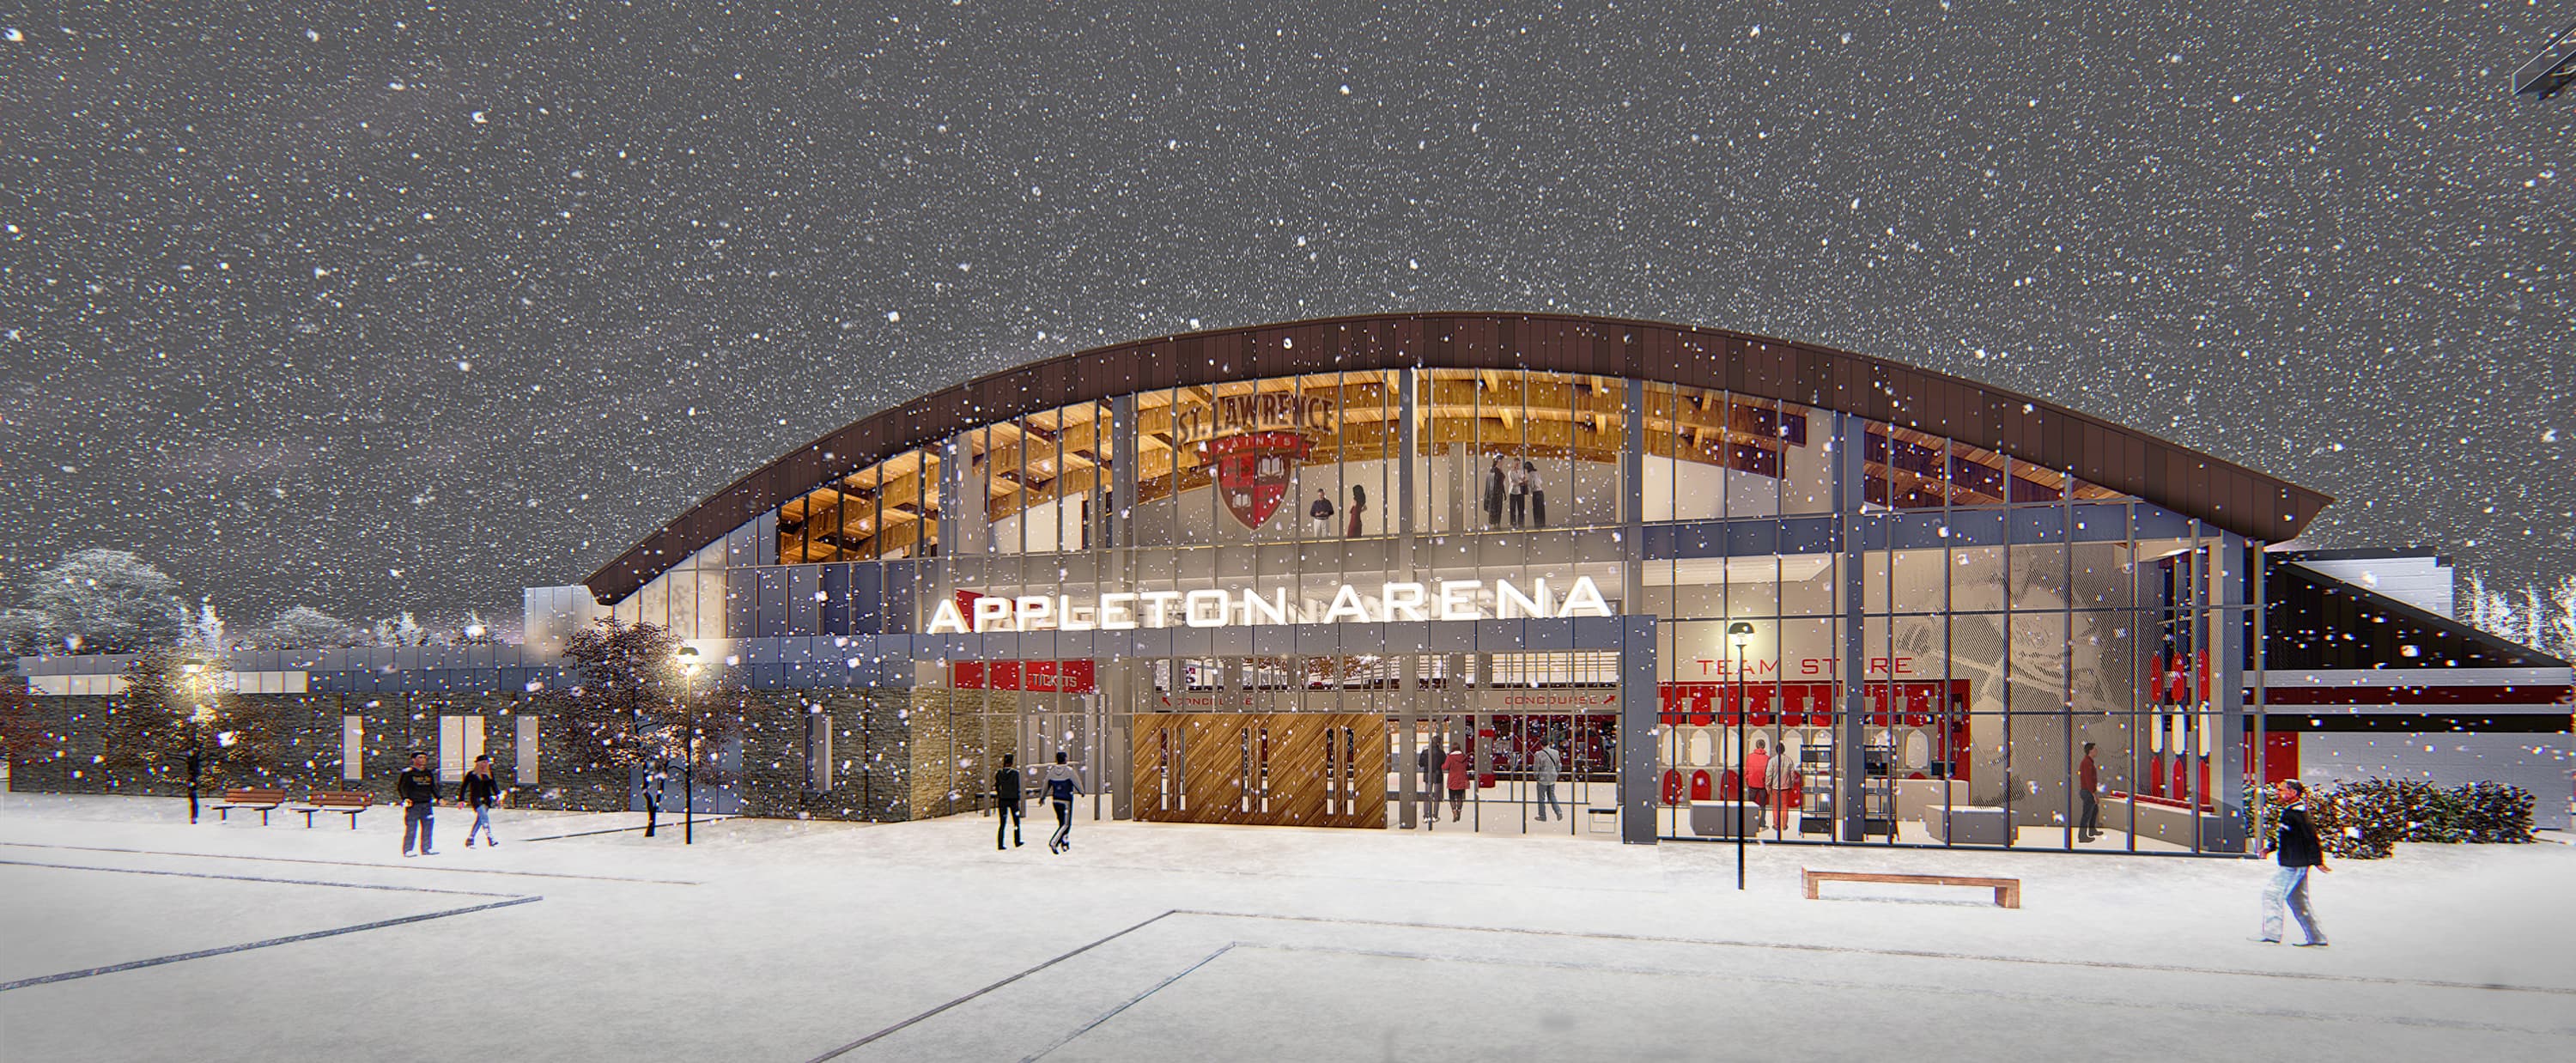 Appleton Arena - Facilities - St. Lawrence University Athletics